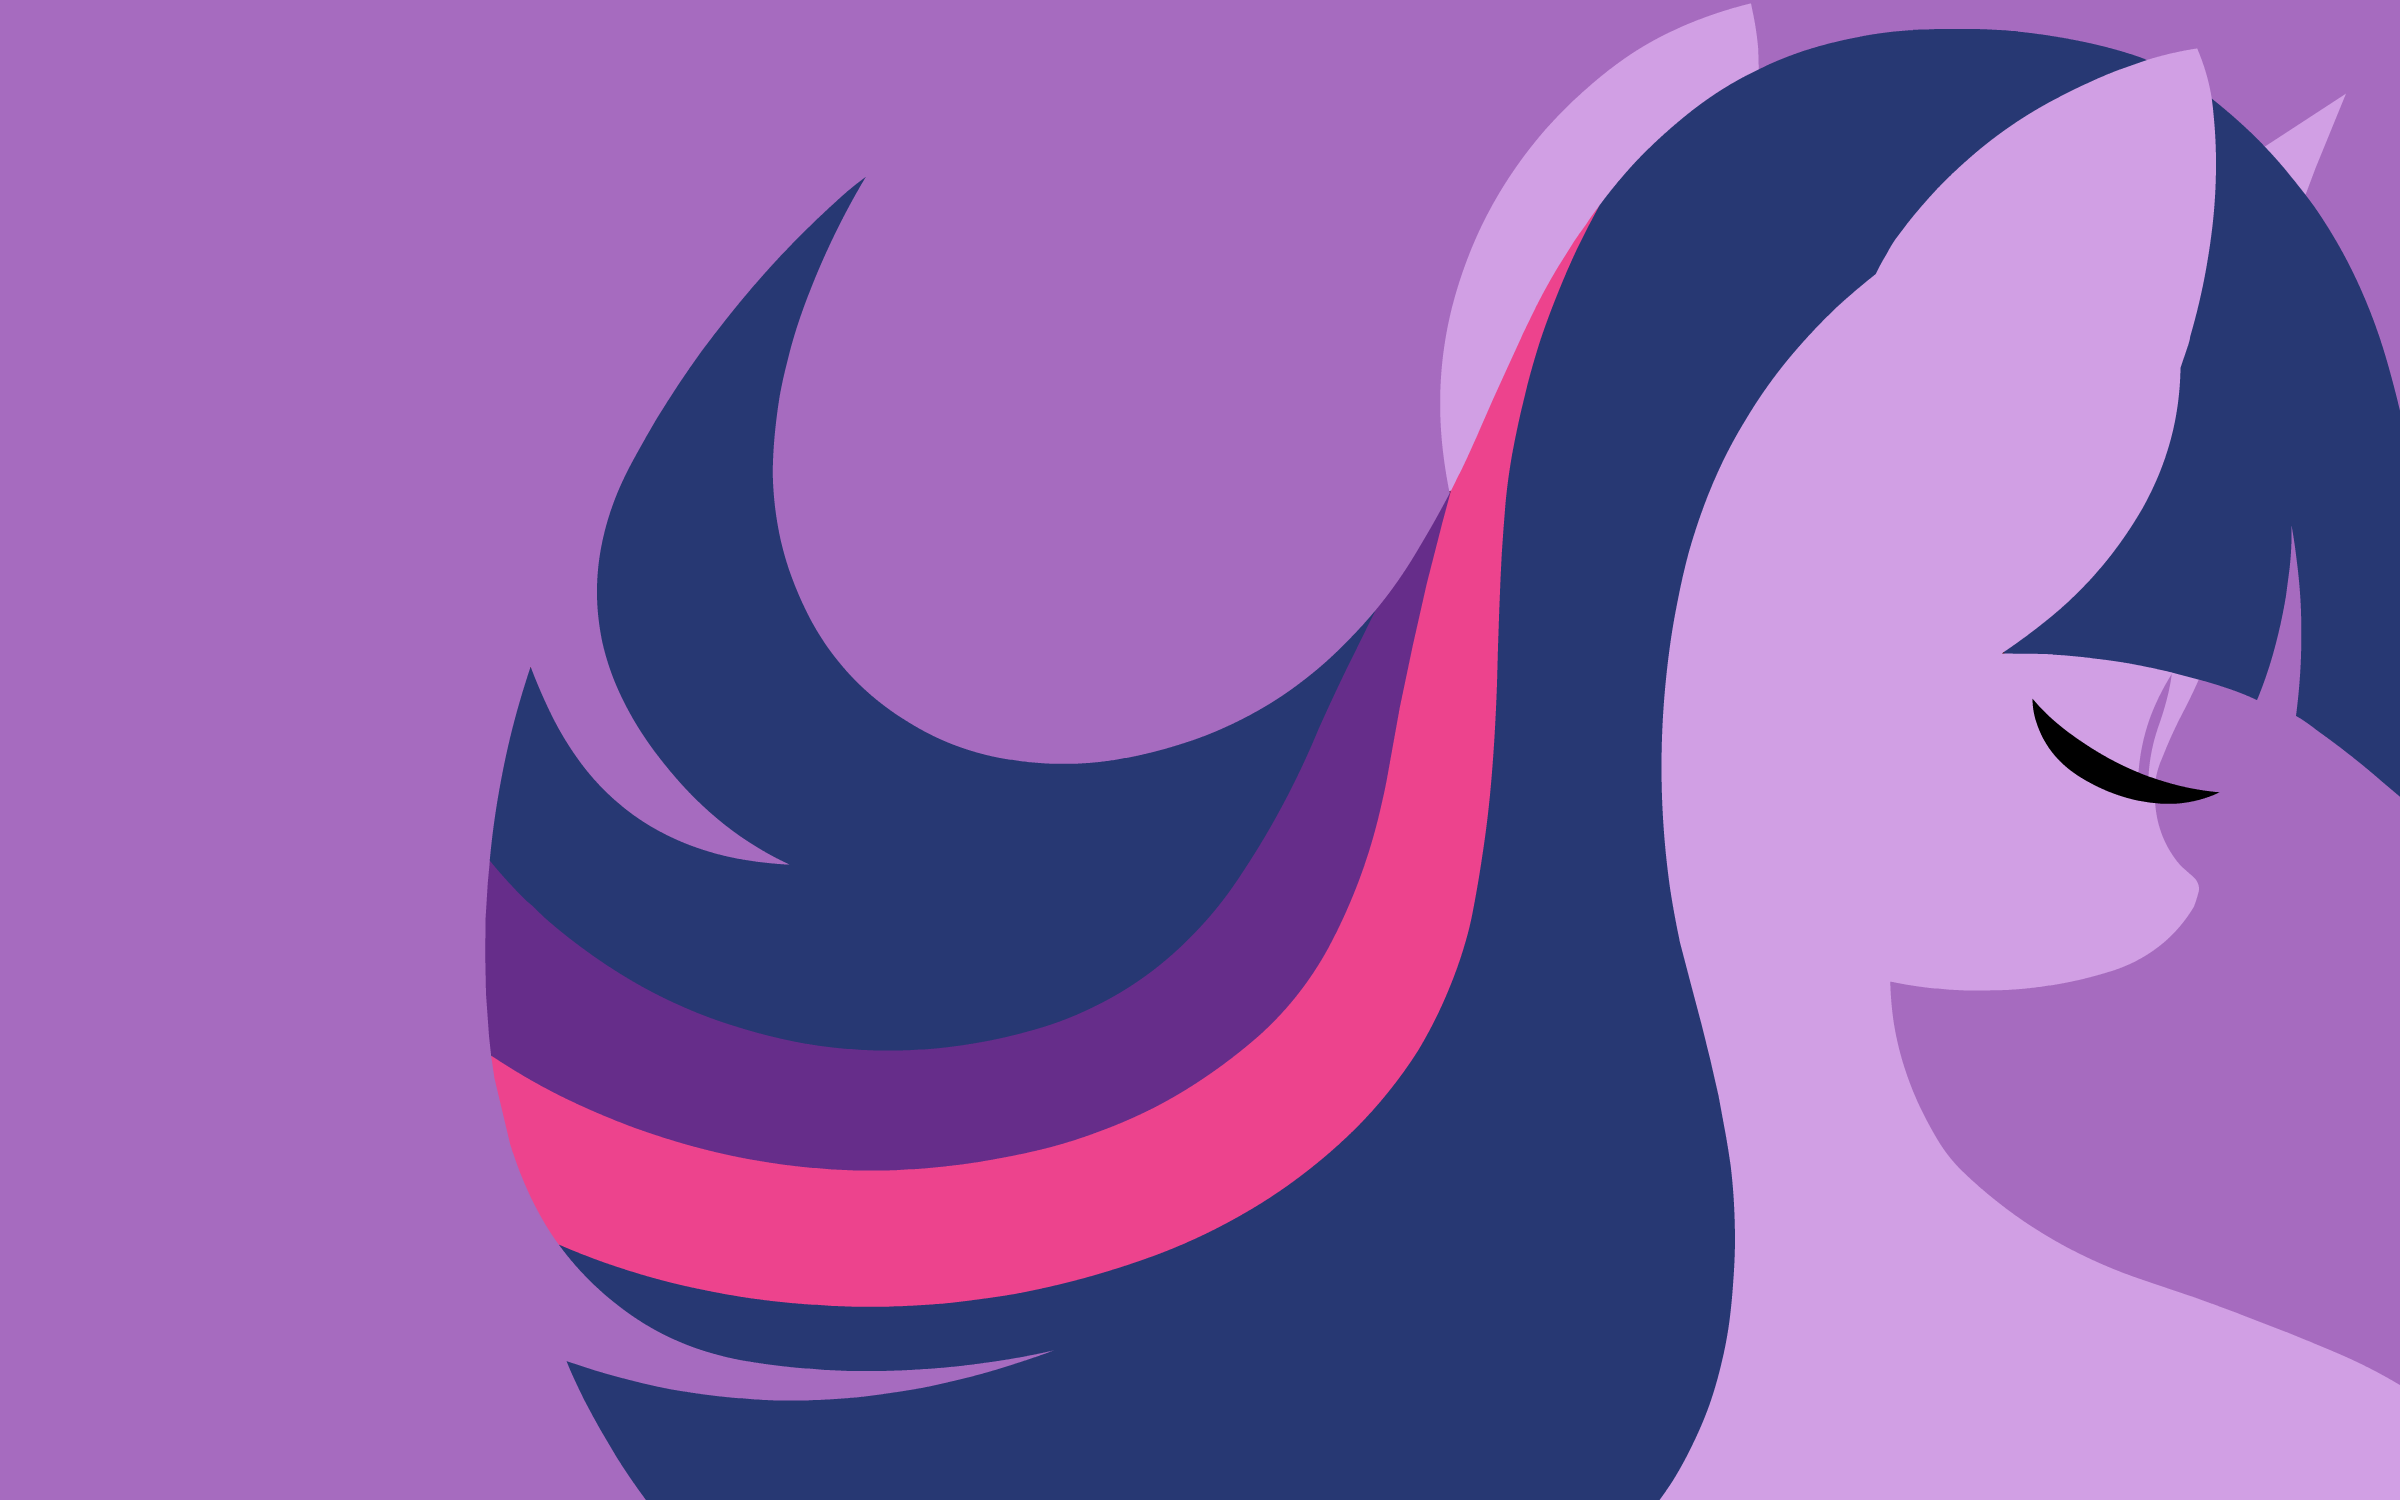 My Little Pony, Twilight Sparkle - desktop wallpaper